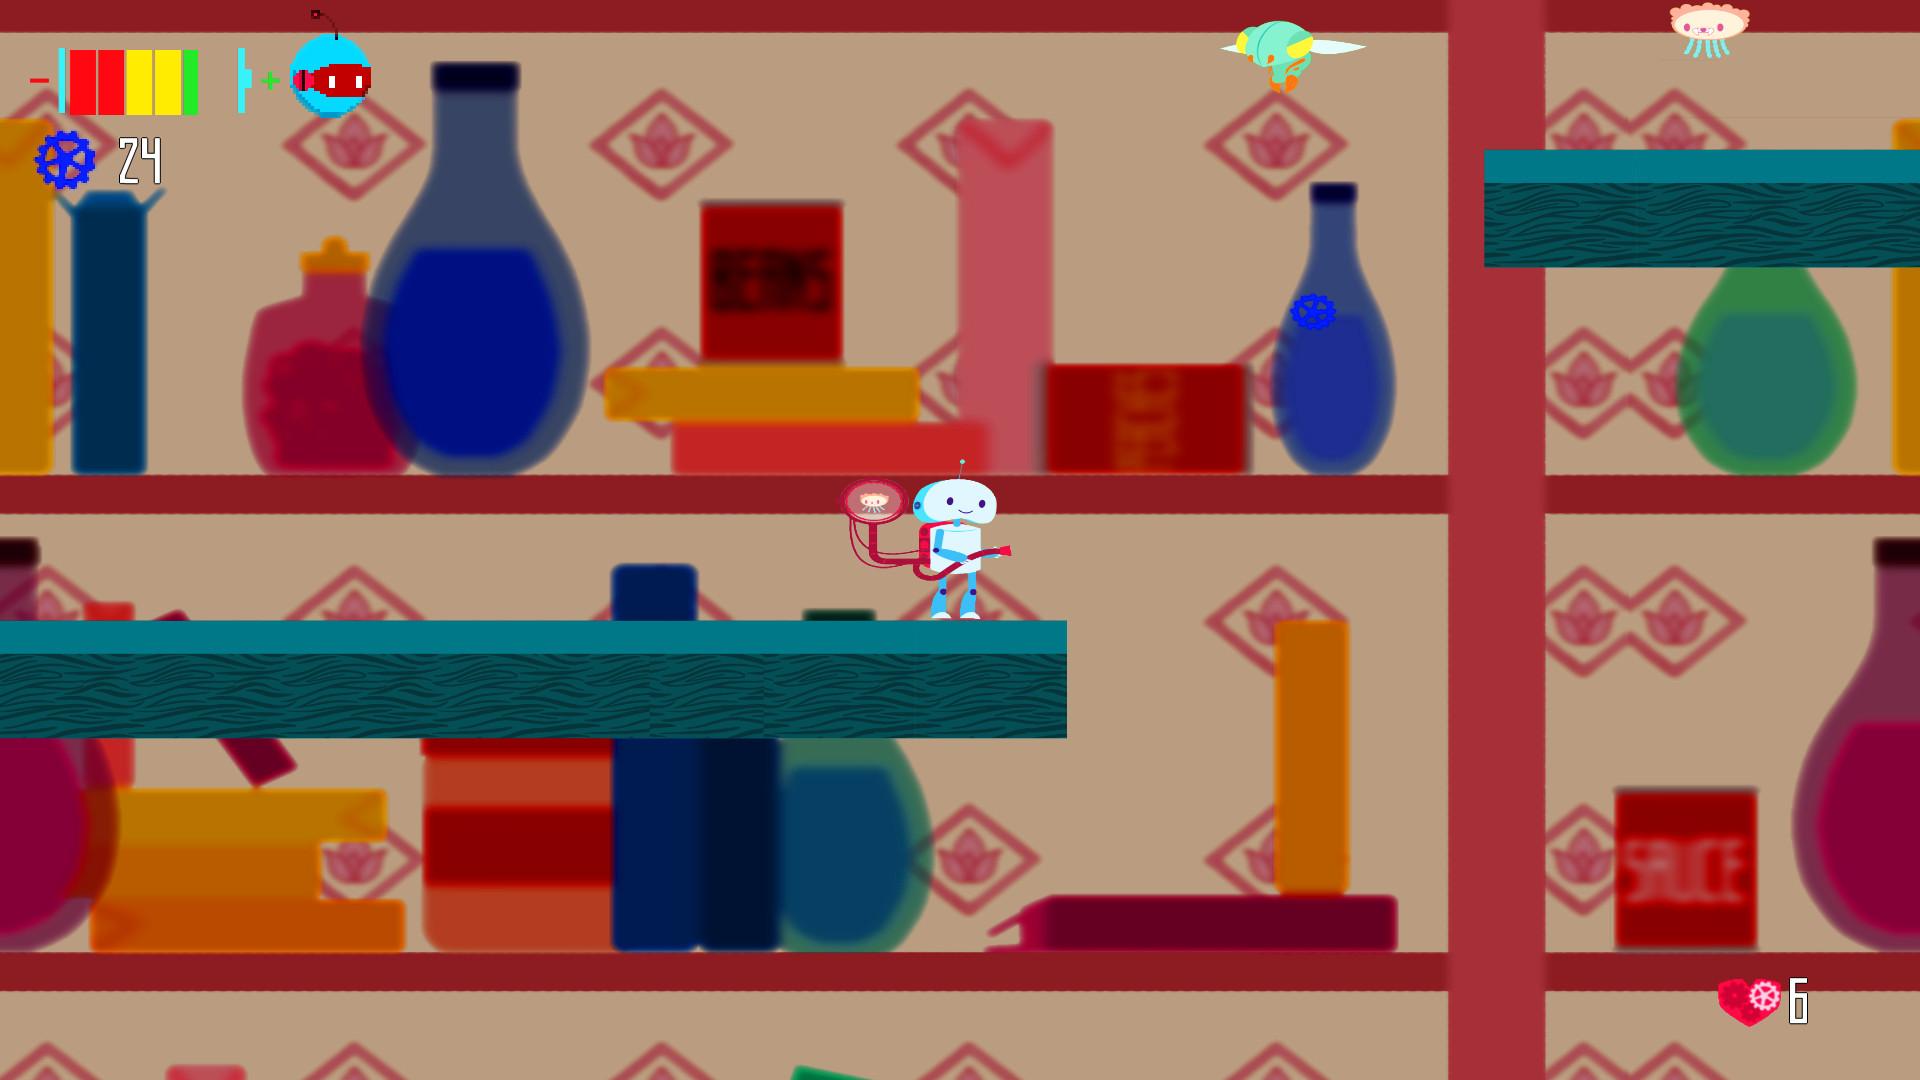 Screenshot №7 from game ROTii